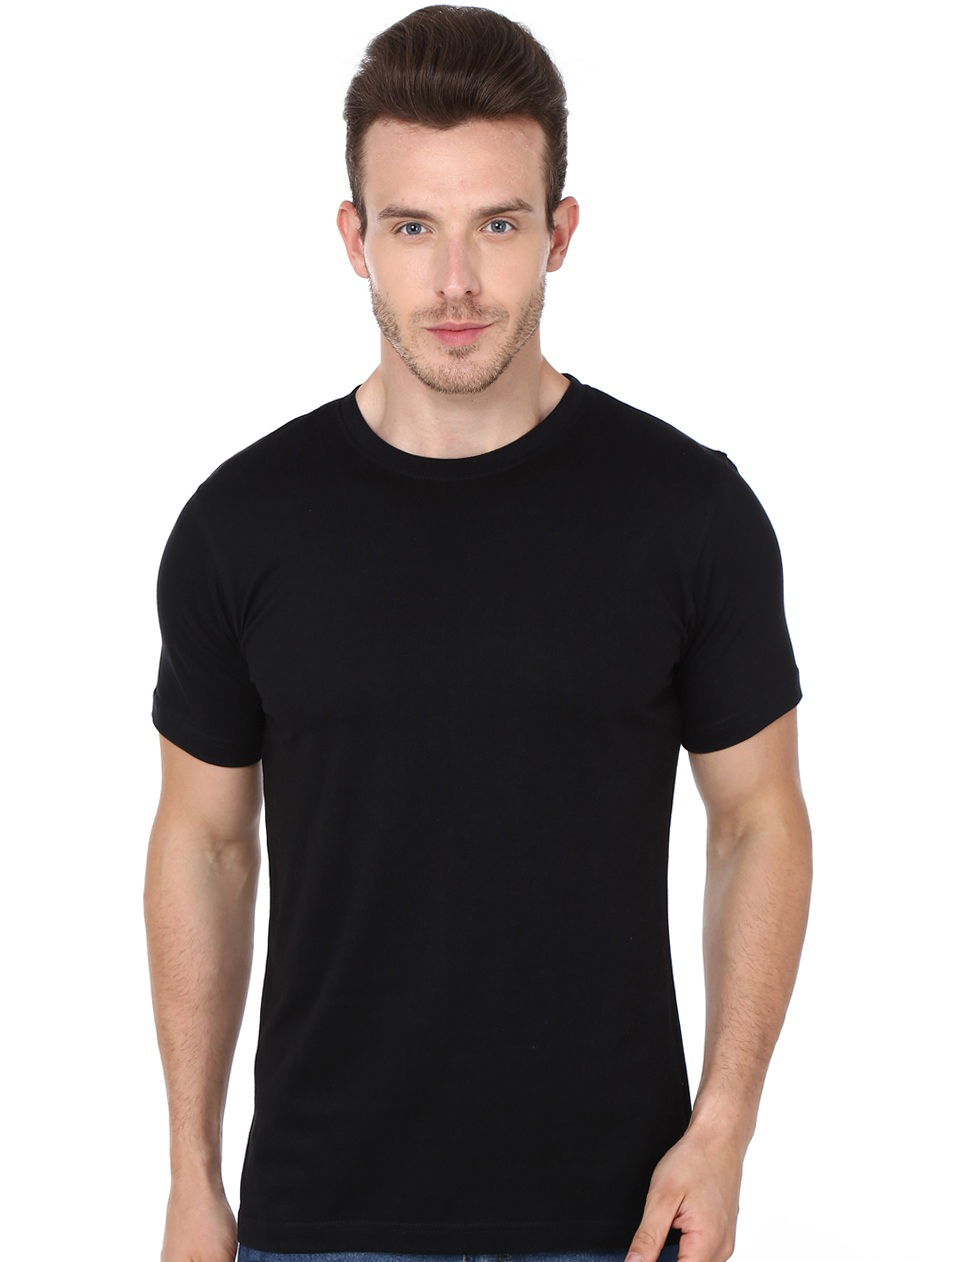 Walking Dead Negan Black T-Shirt | Swag Shirts